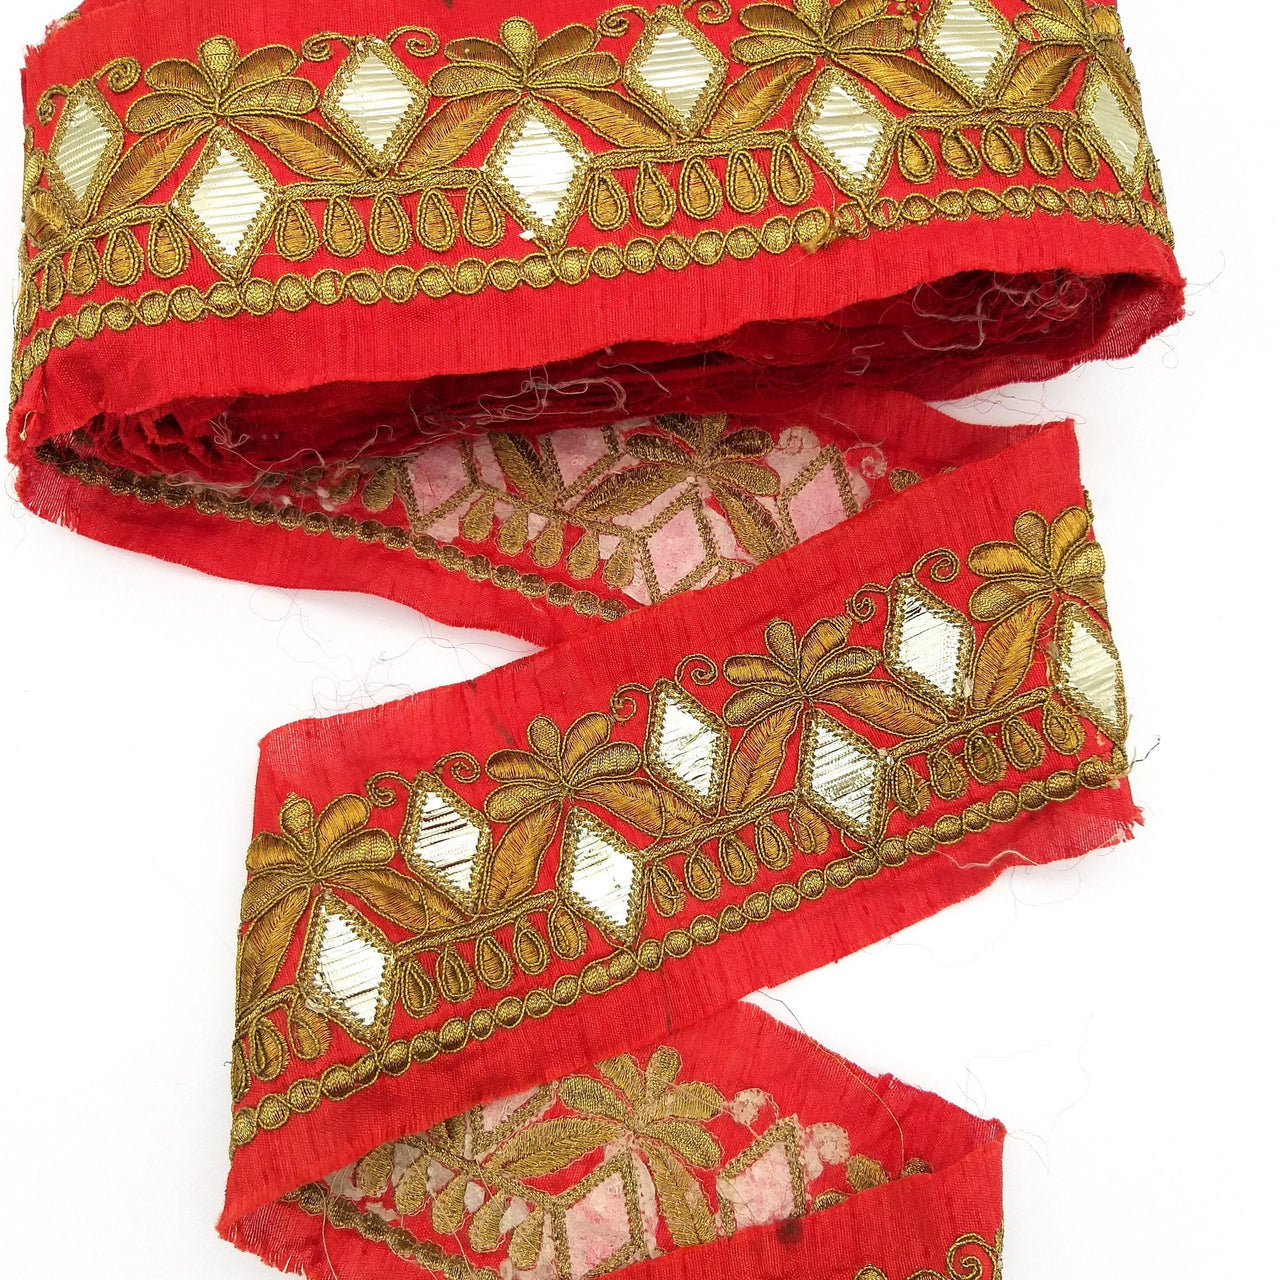 Trim By 9 Yard Maroon Red Art Silk Fabric Trim, Gold Floral Embroidery Gota Patti Sari Border Decorative Trim Craft Lace